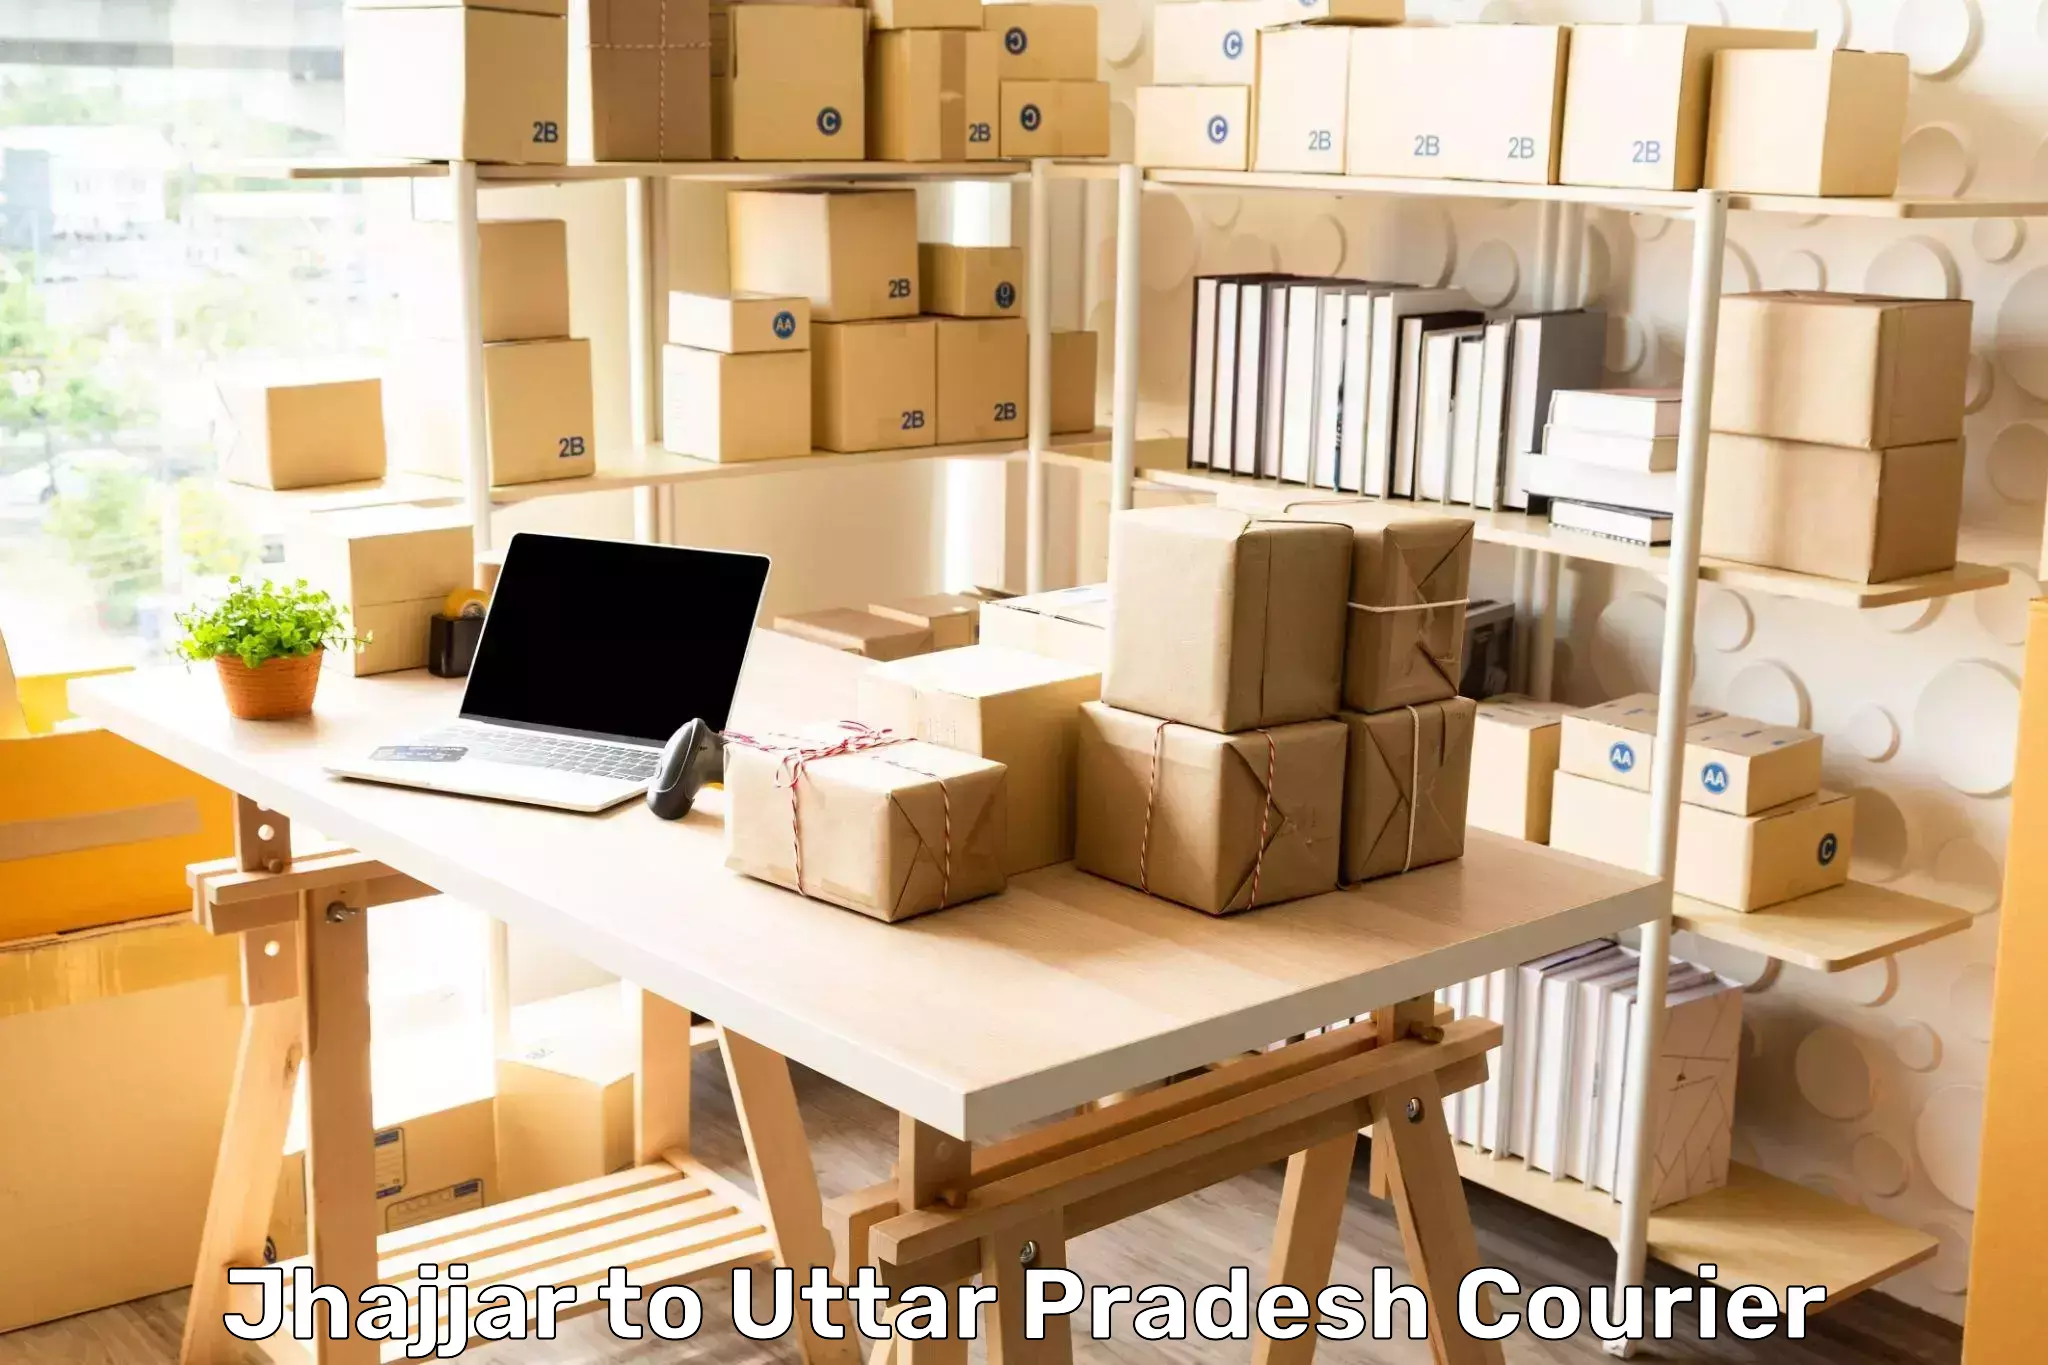 User-friendly courier app Jhajjar to Uttar Pradesh